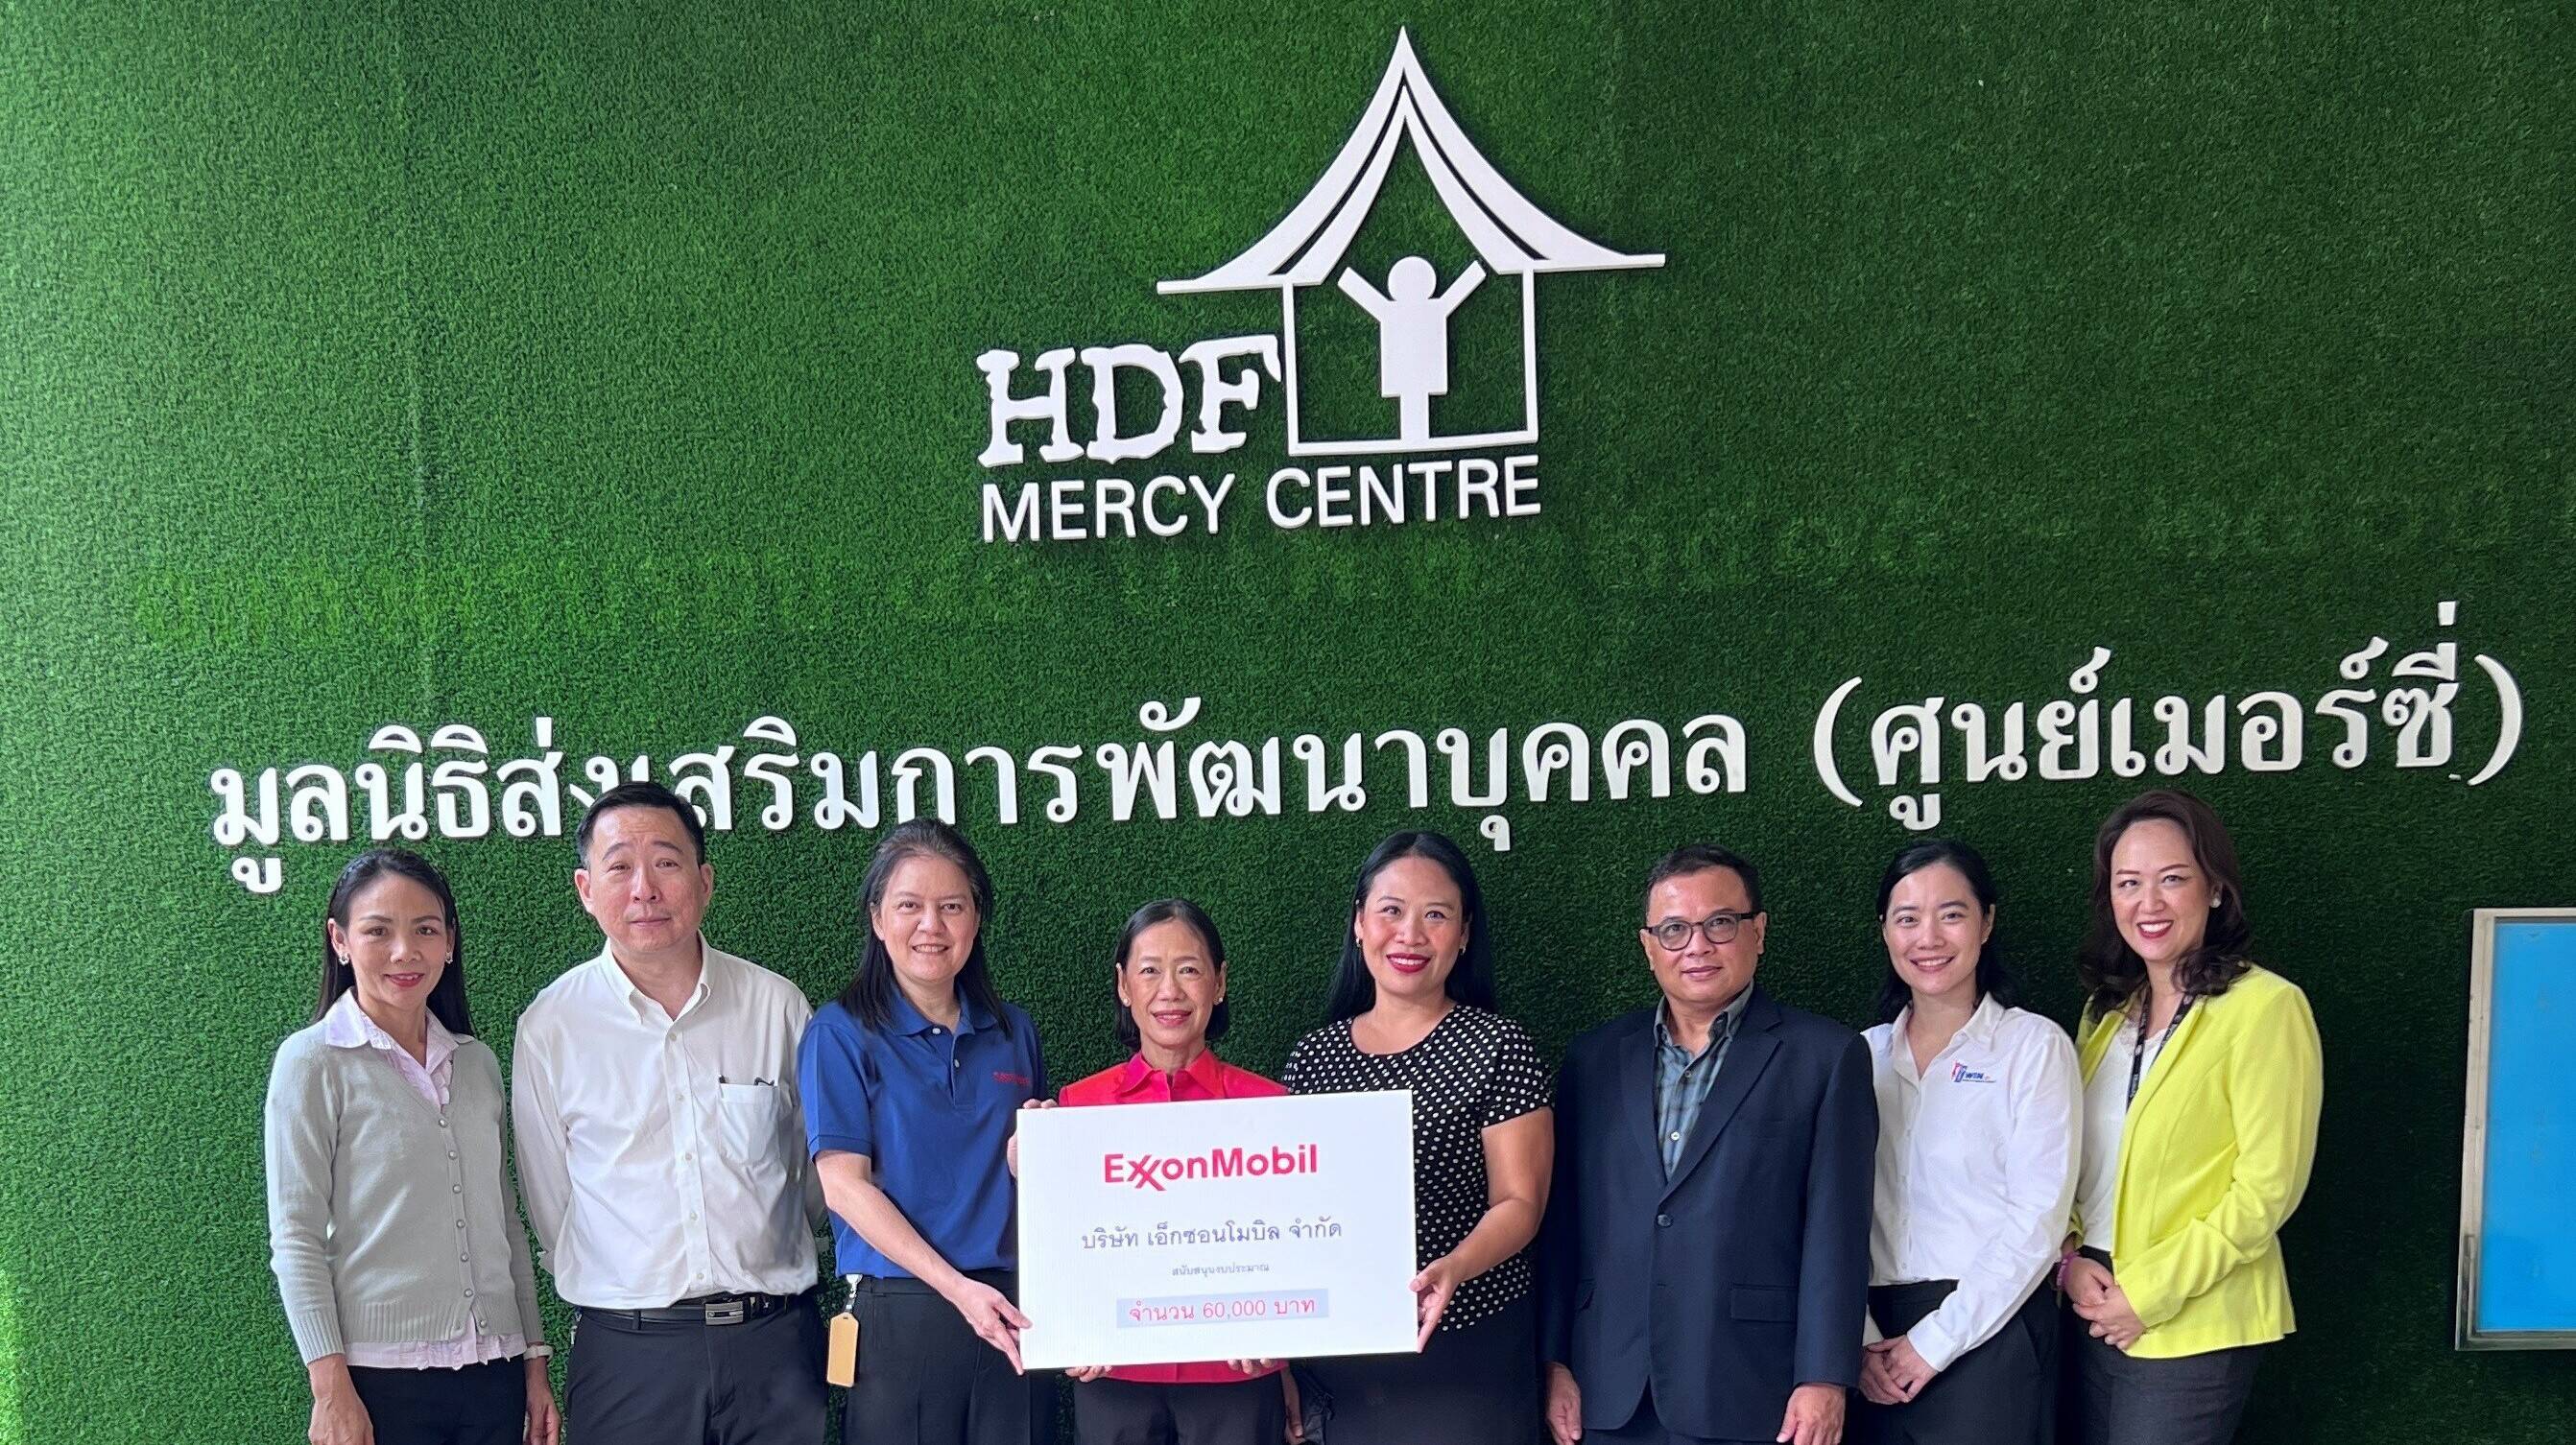 ExxonMobil in Thailand support Mercy Center